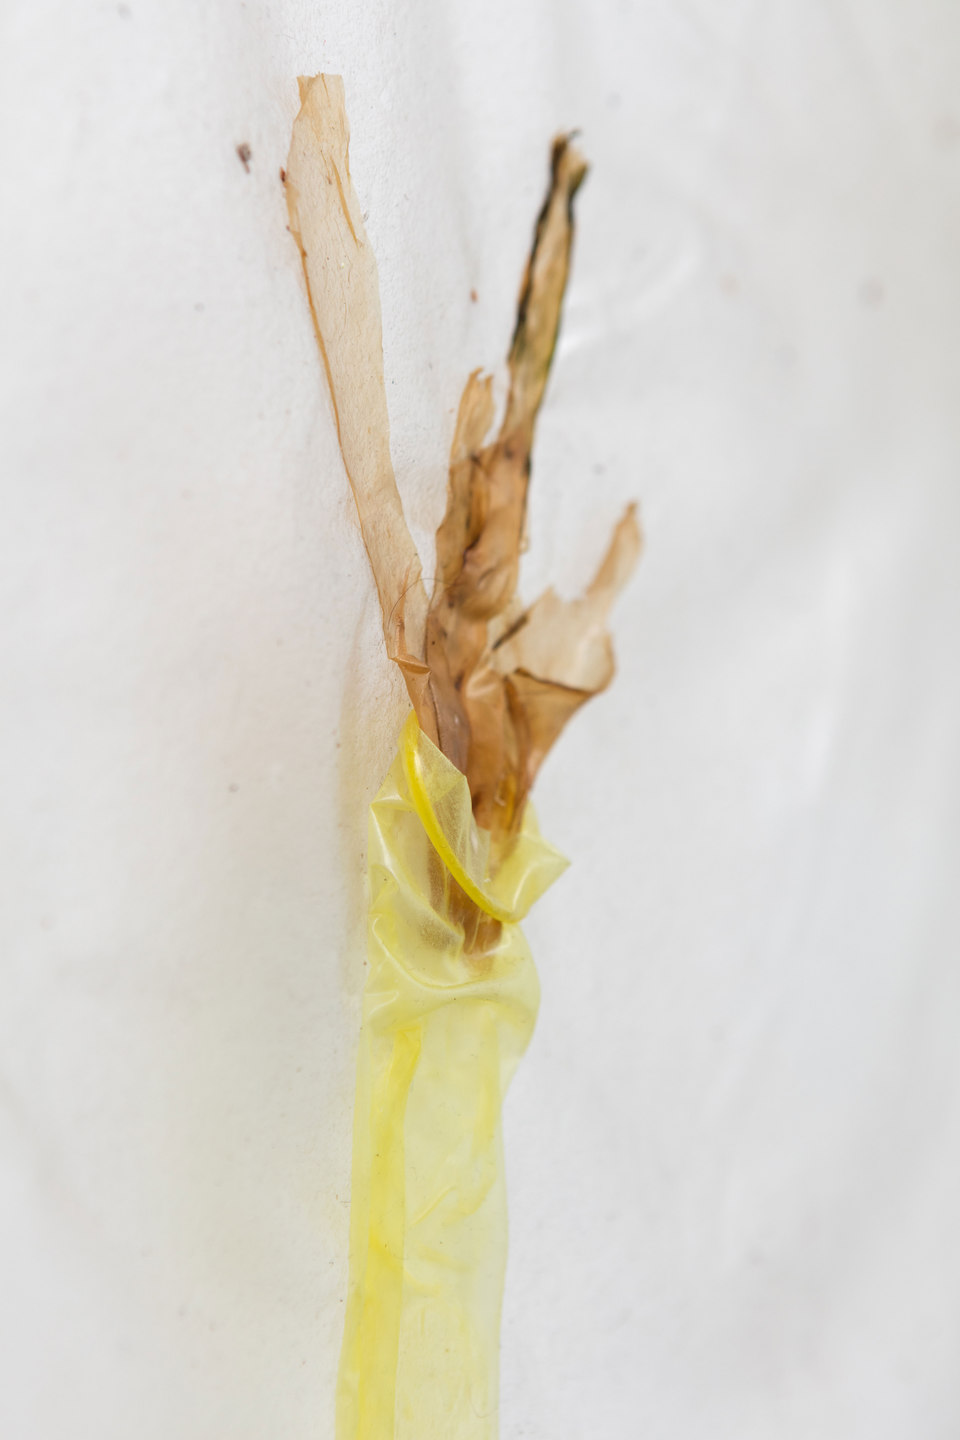 Aude Pariset, GREENHOUSES, 'Flower Maiden (Ecoveg)' [detail], Bioplastic, UV print on bioplastic, laser transfer print, condoms, seaweed, wood, paint, 60 x 90cm, 2016, Cell Project Space